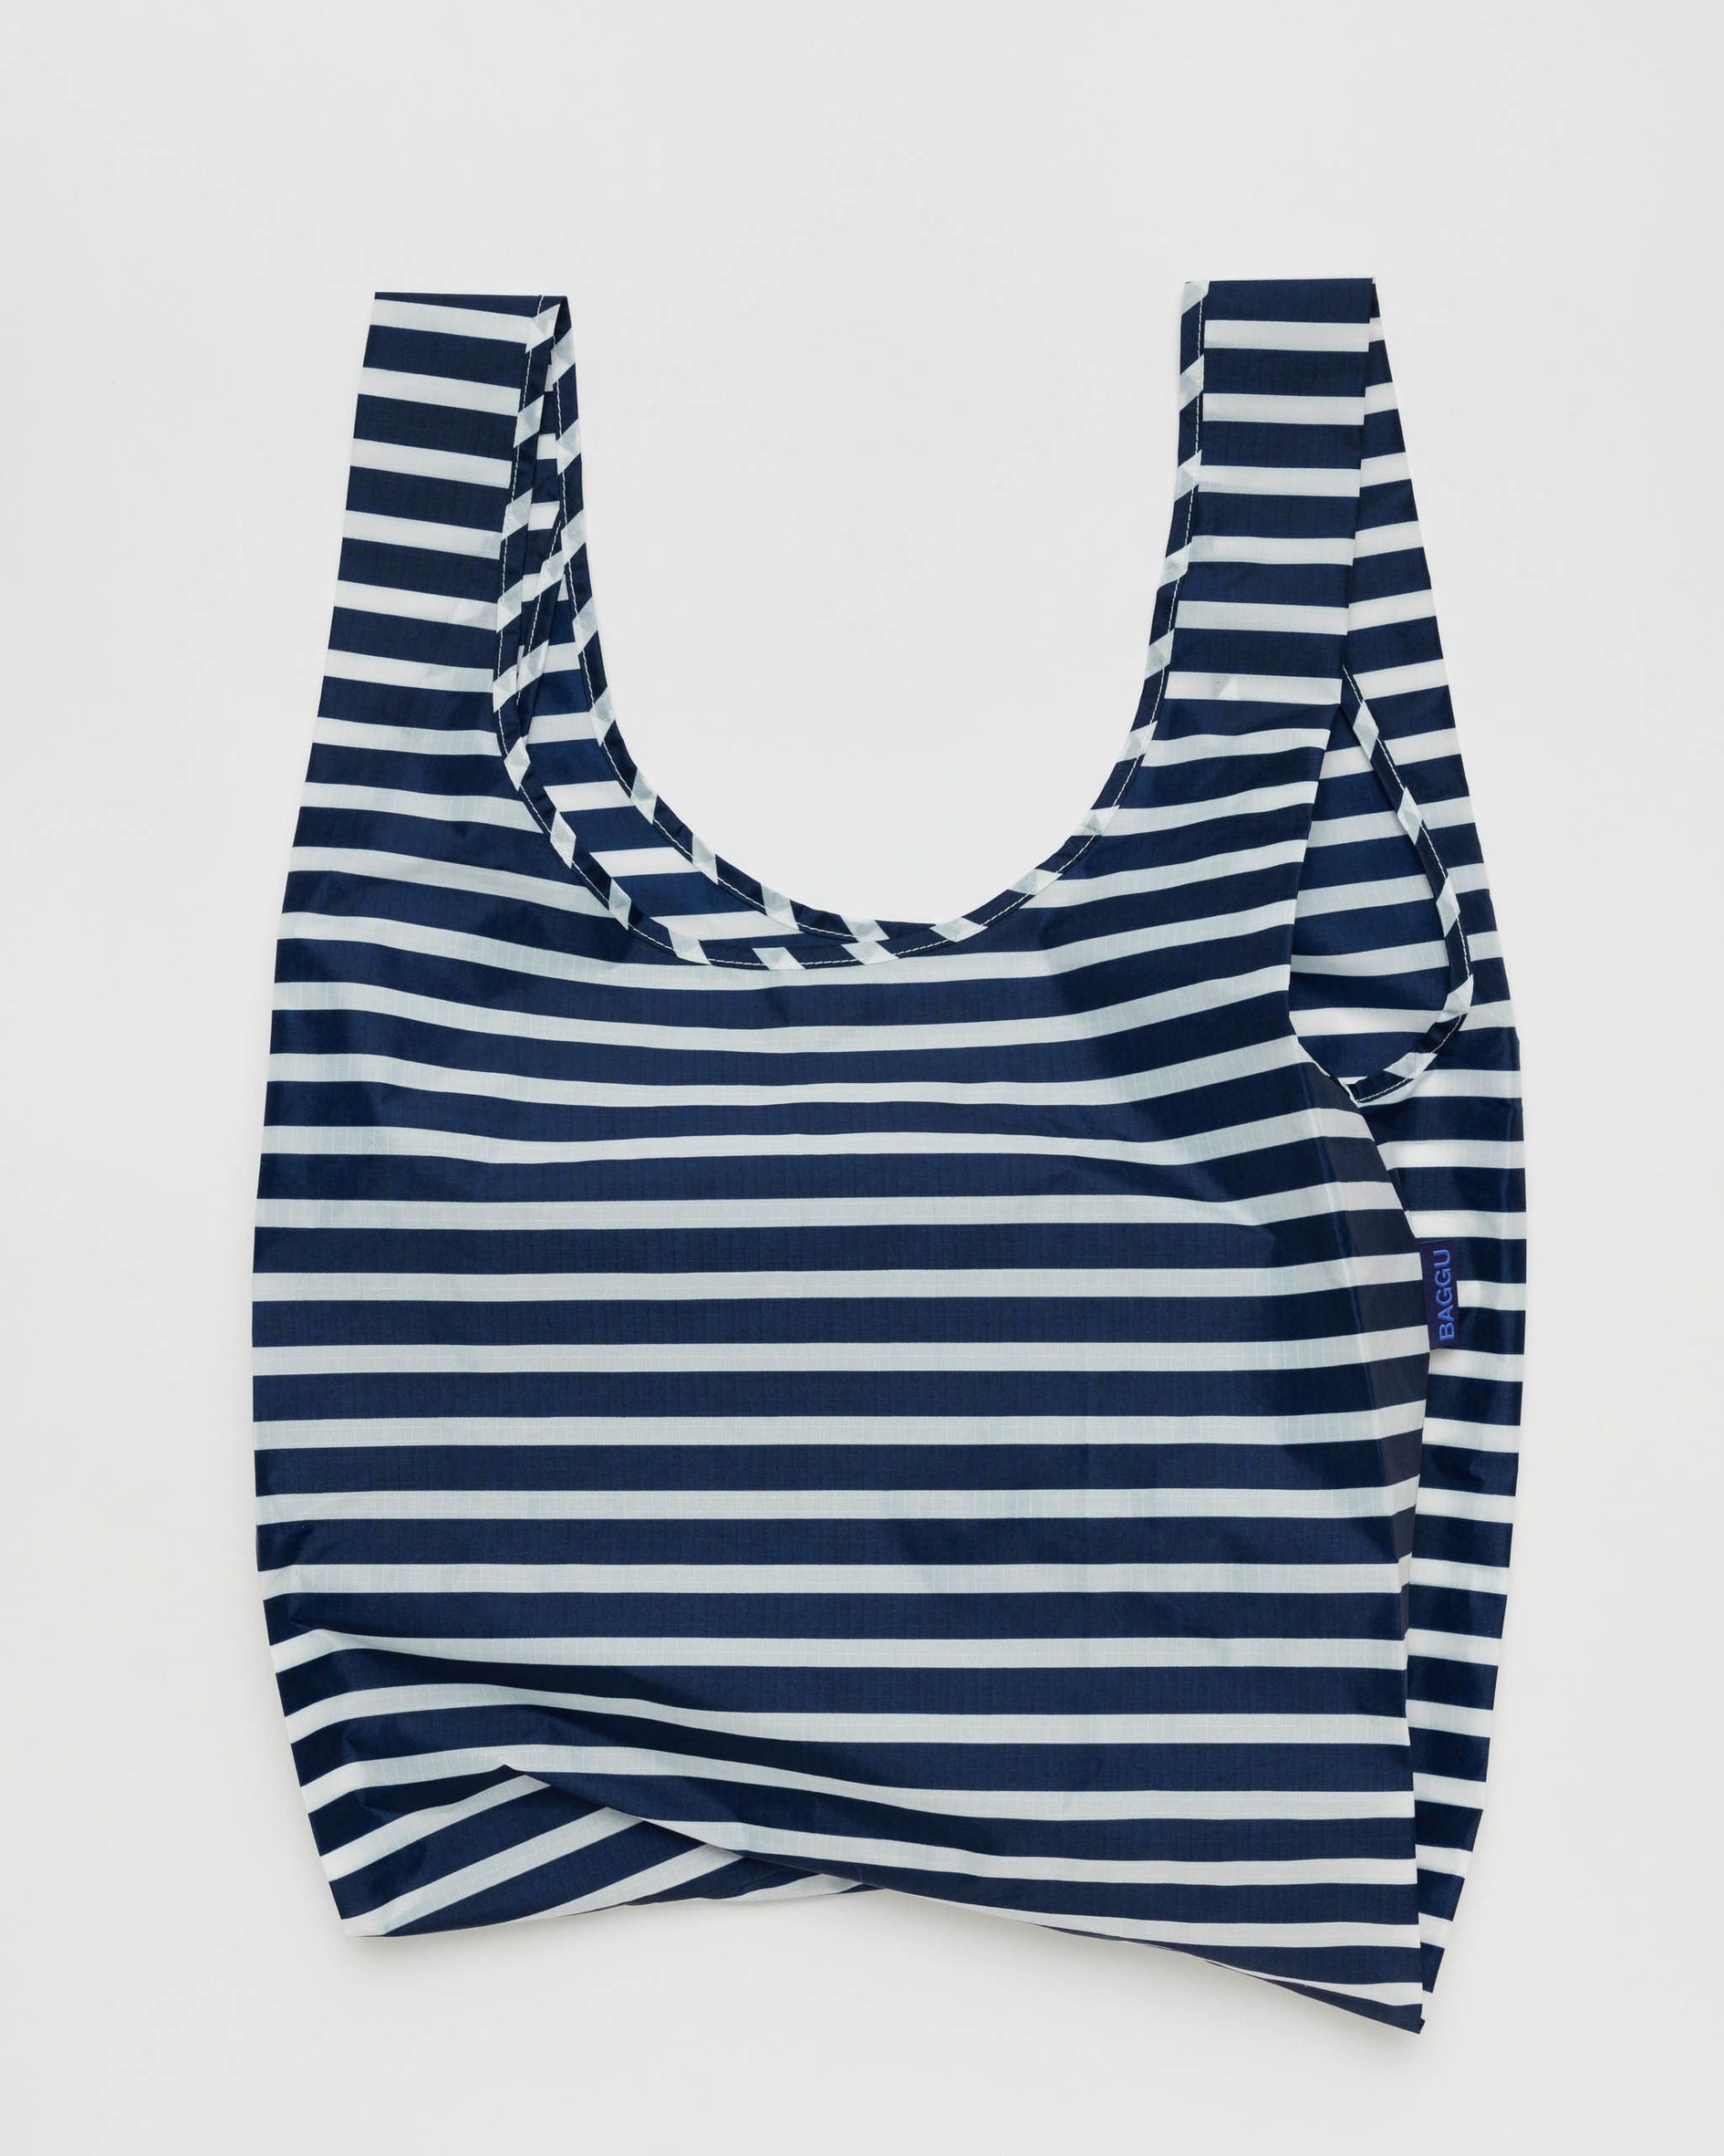 Baggu Standard Reusable Bag | Navy Stripe